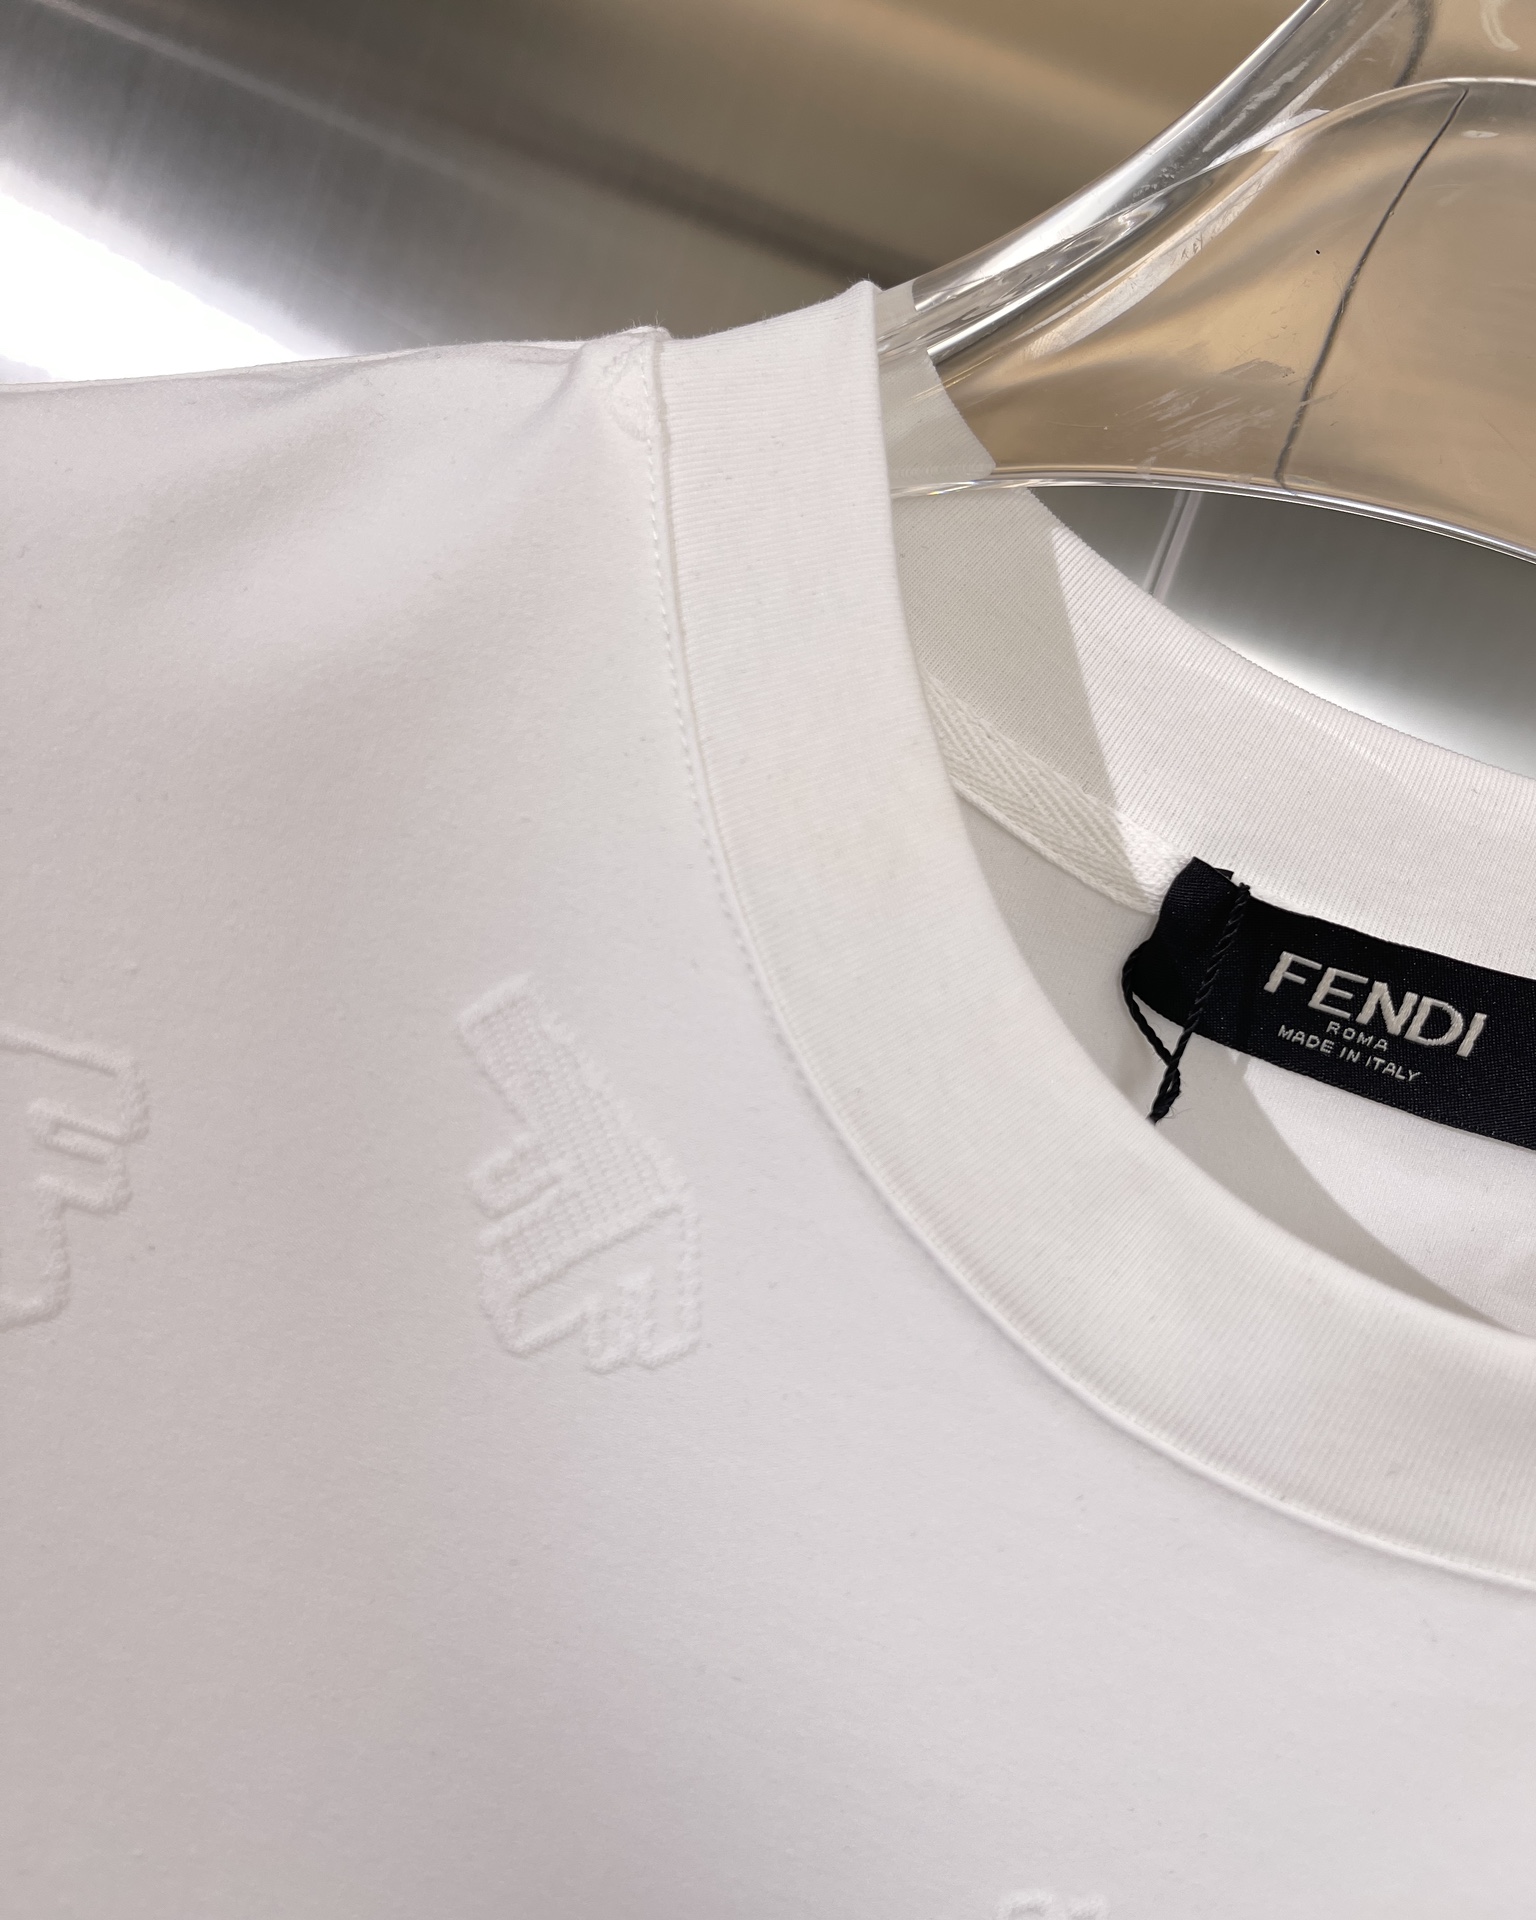 Fendi芬迪款式男款短袖T恤衫T-shirt100支双移圈提花面料全套丝光针数是目前移圈提花针数最高的